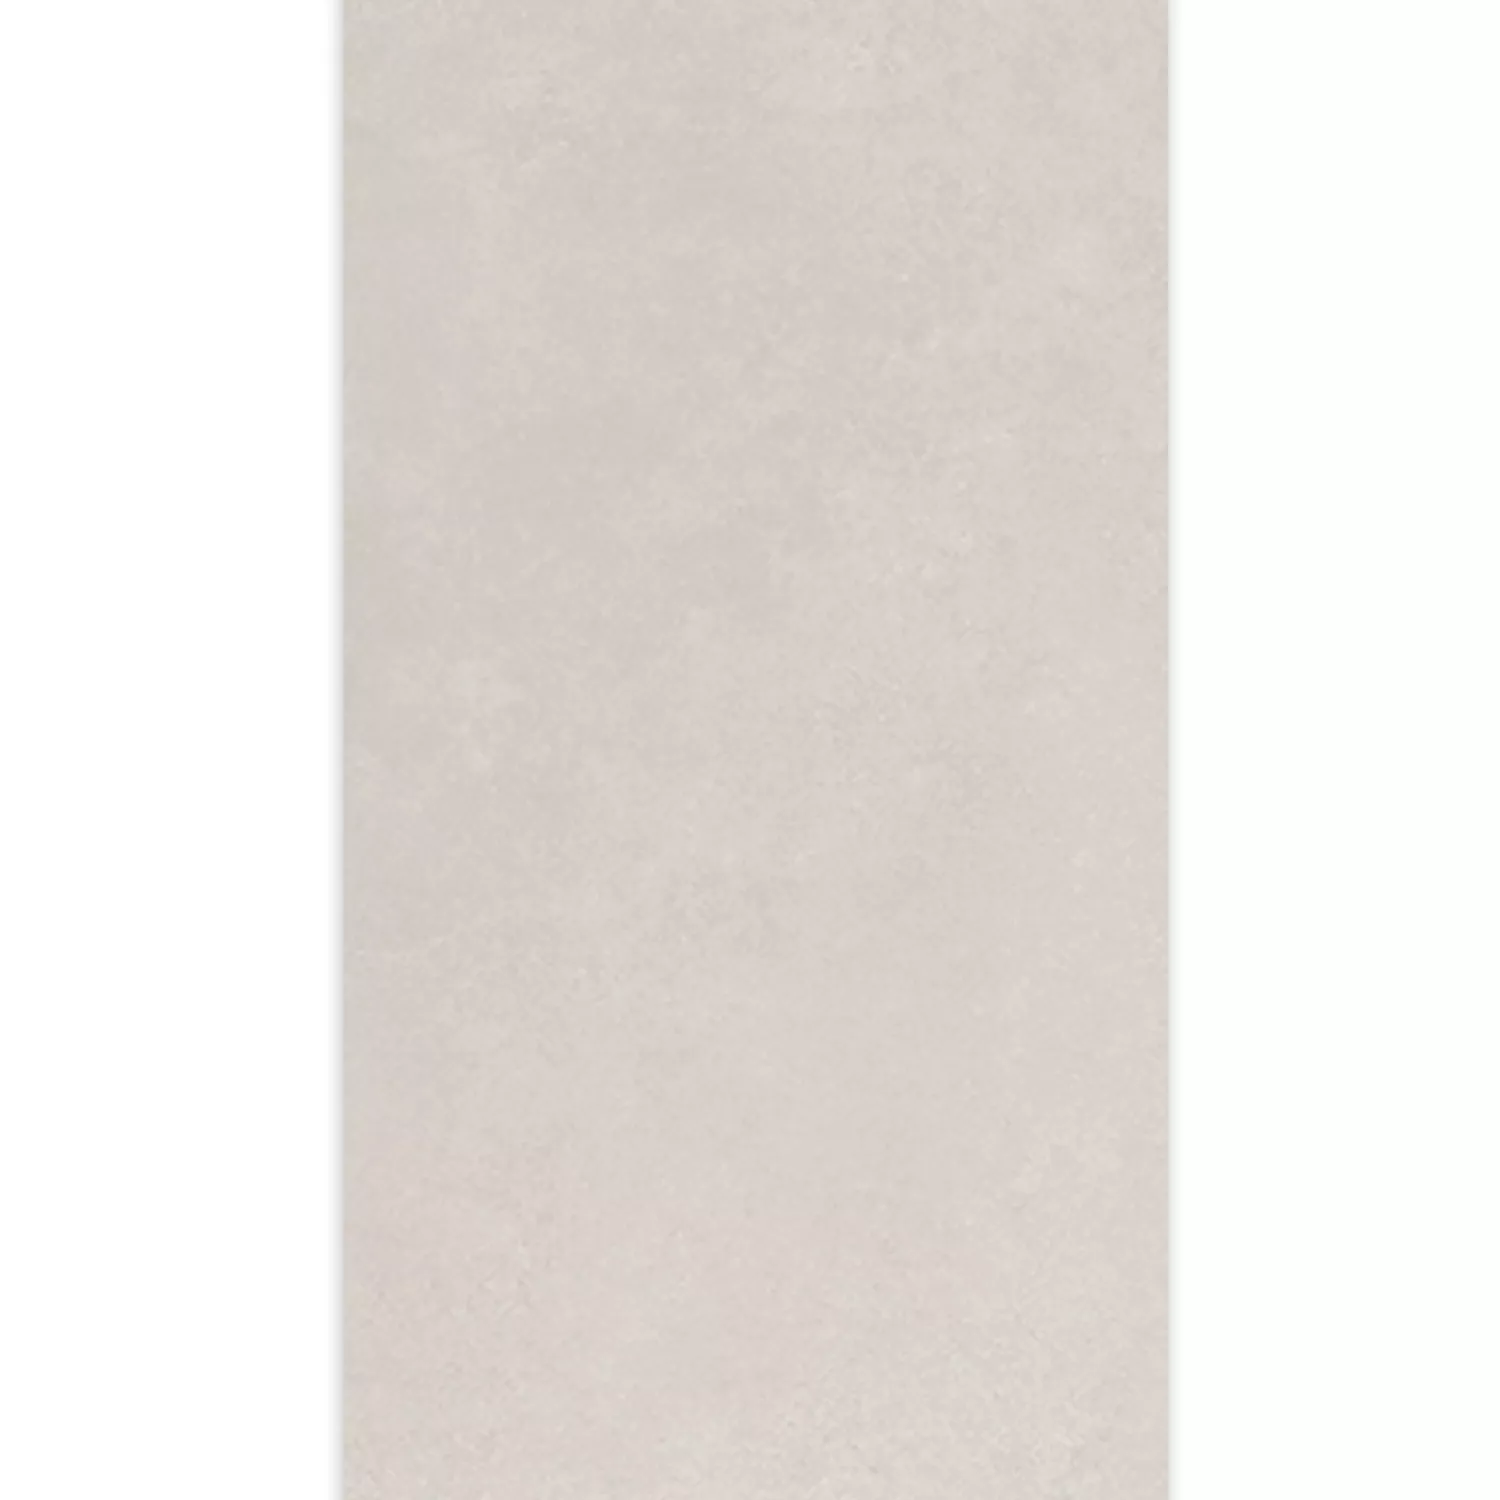 Próbka Płytki Podłogowe Hayat Bone 60x120cm